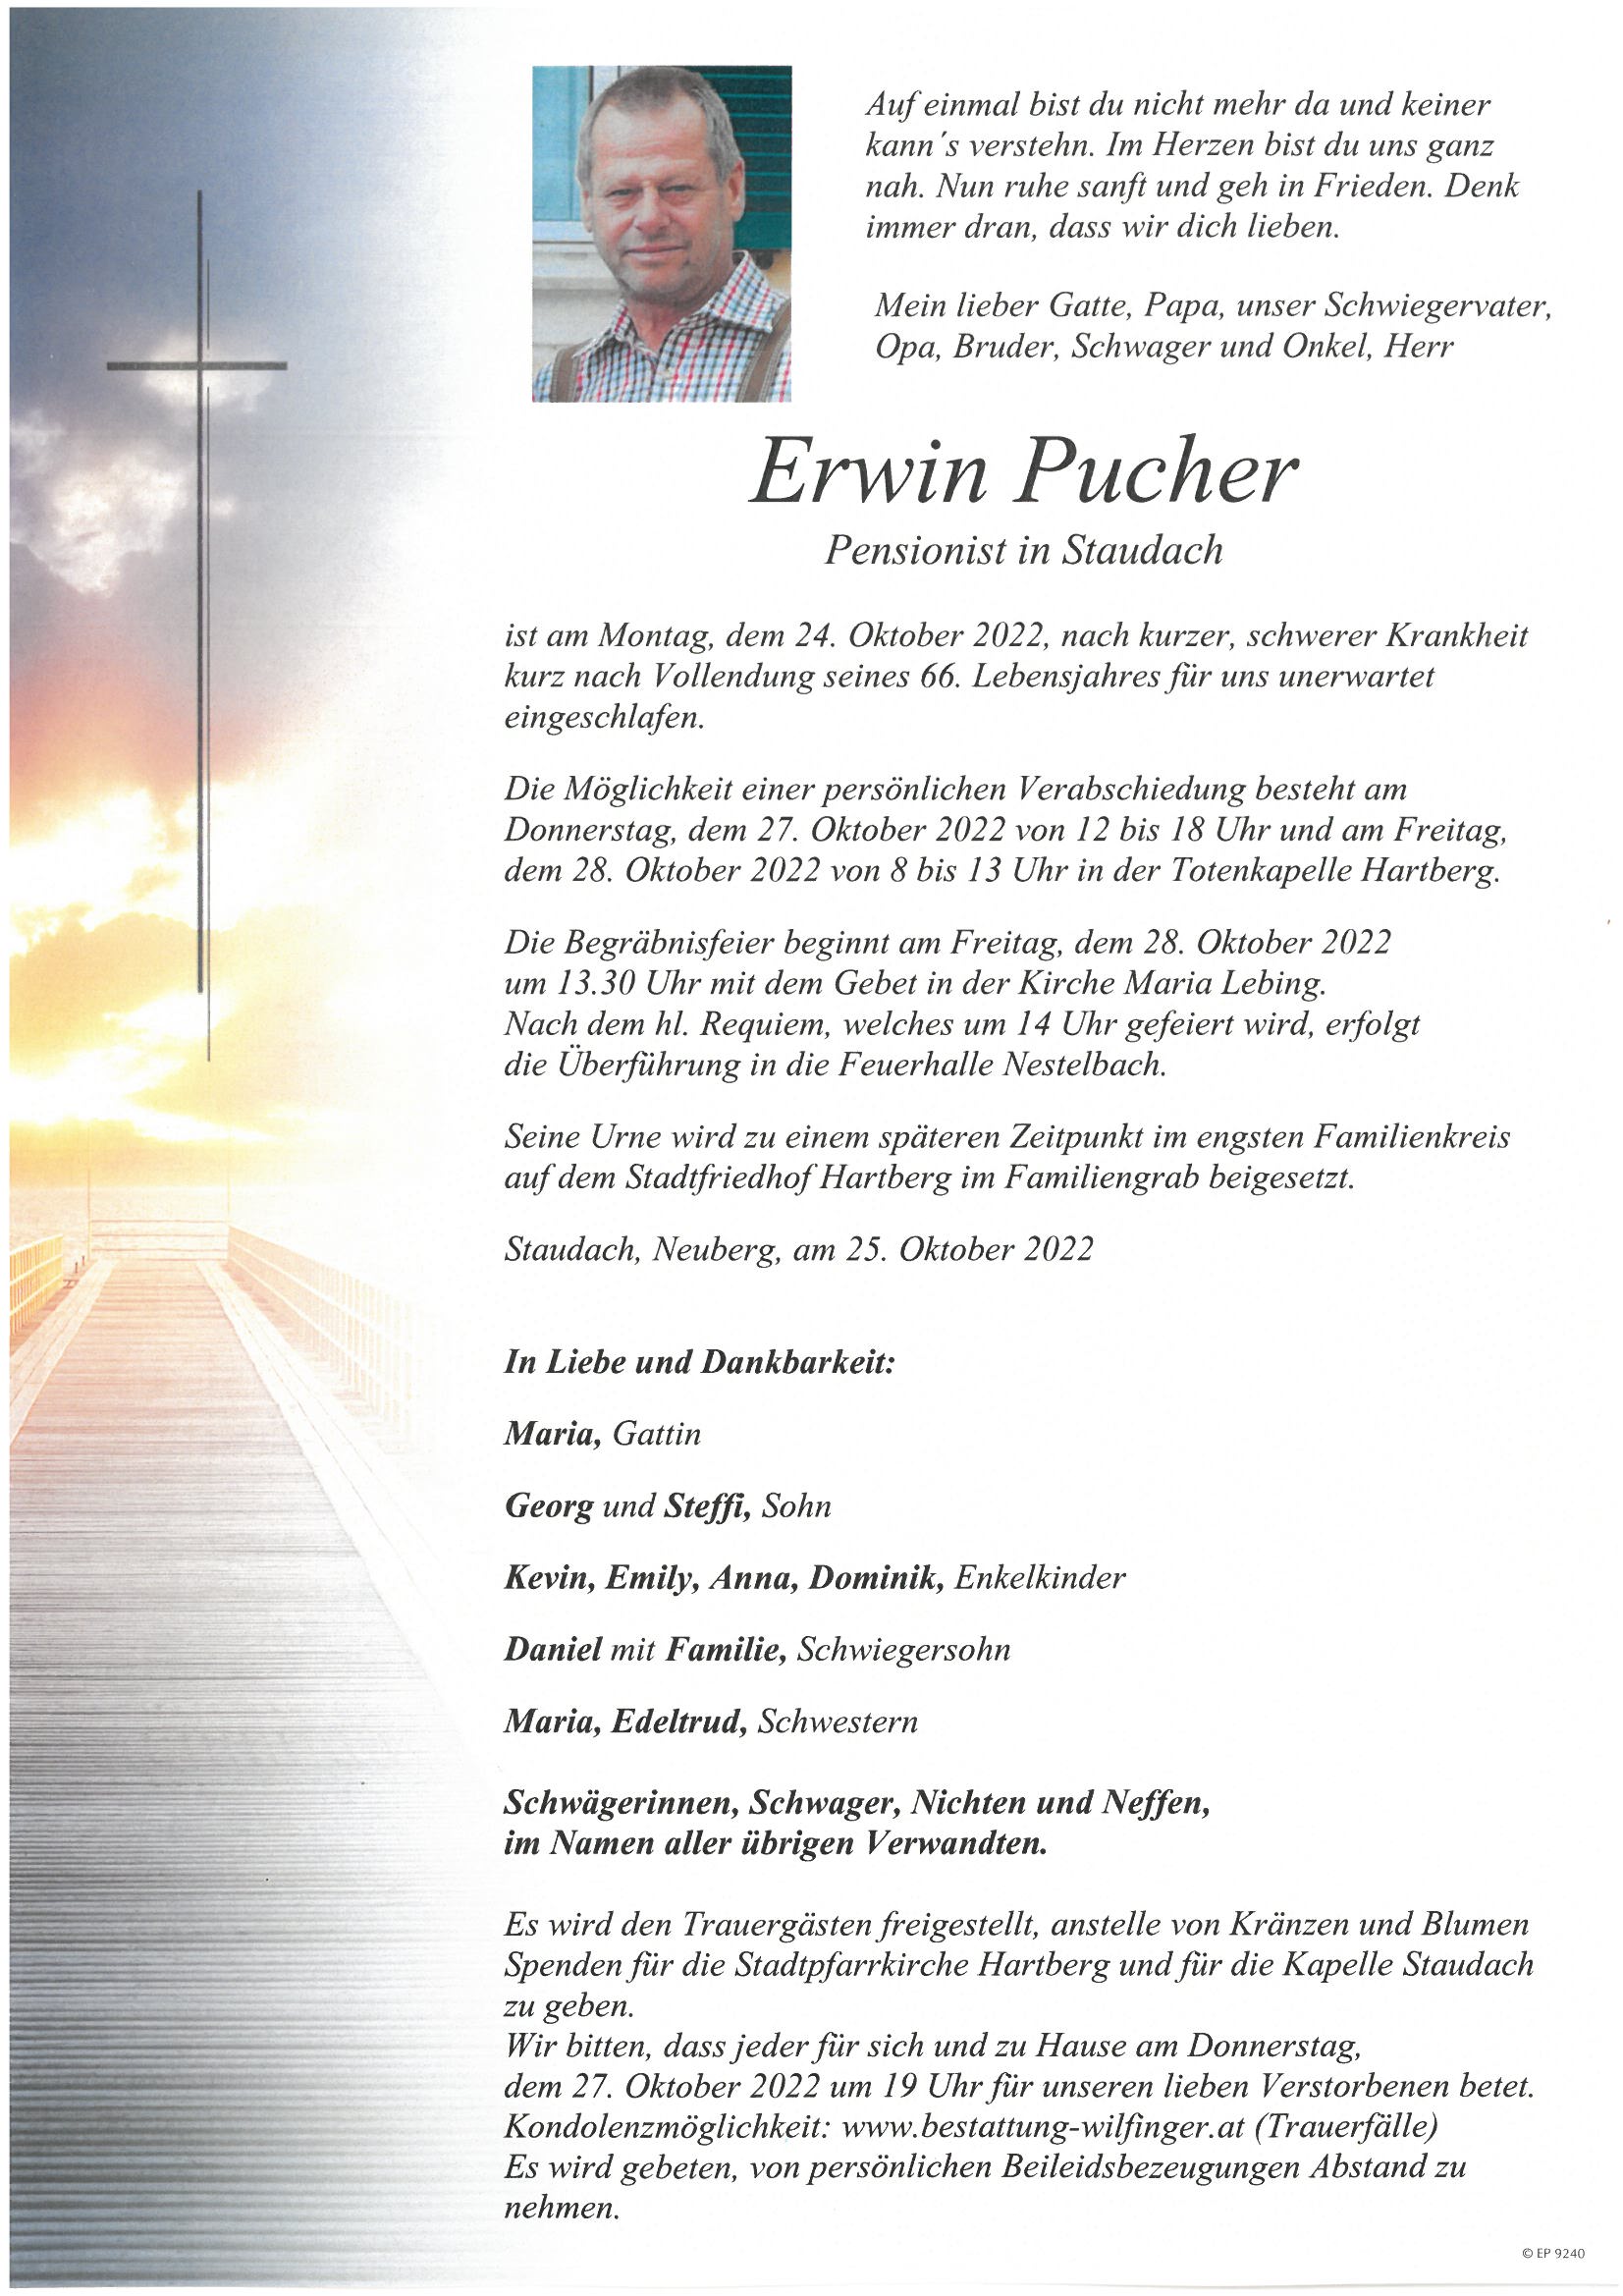 Erwin Pucher, Staudach